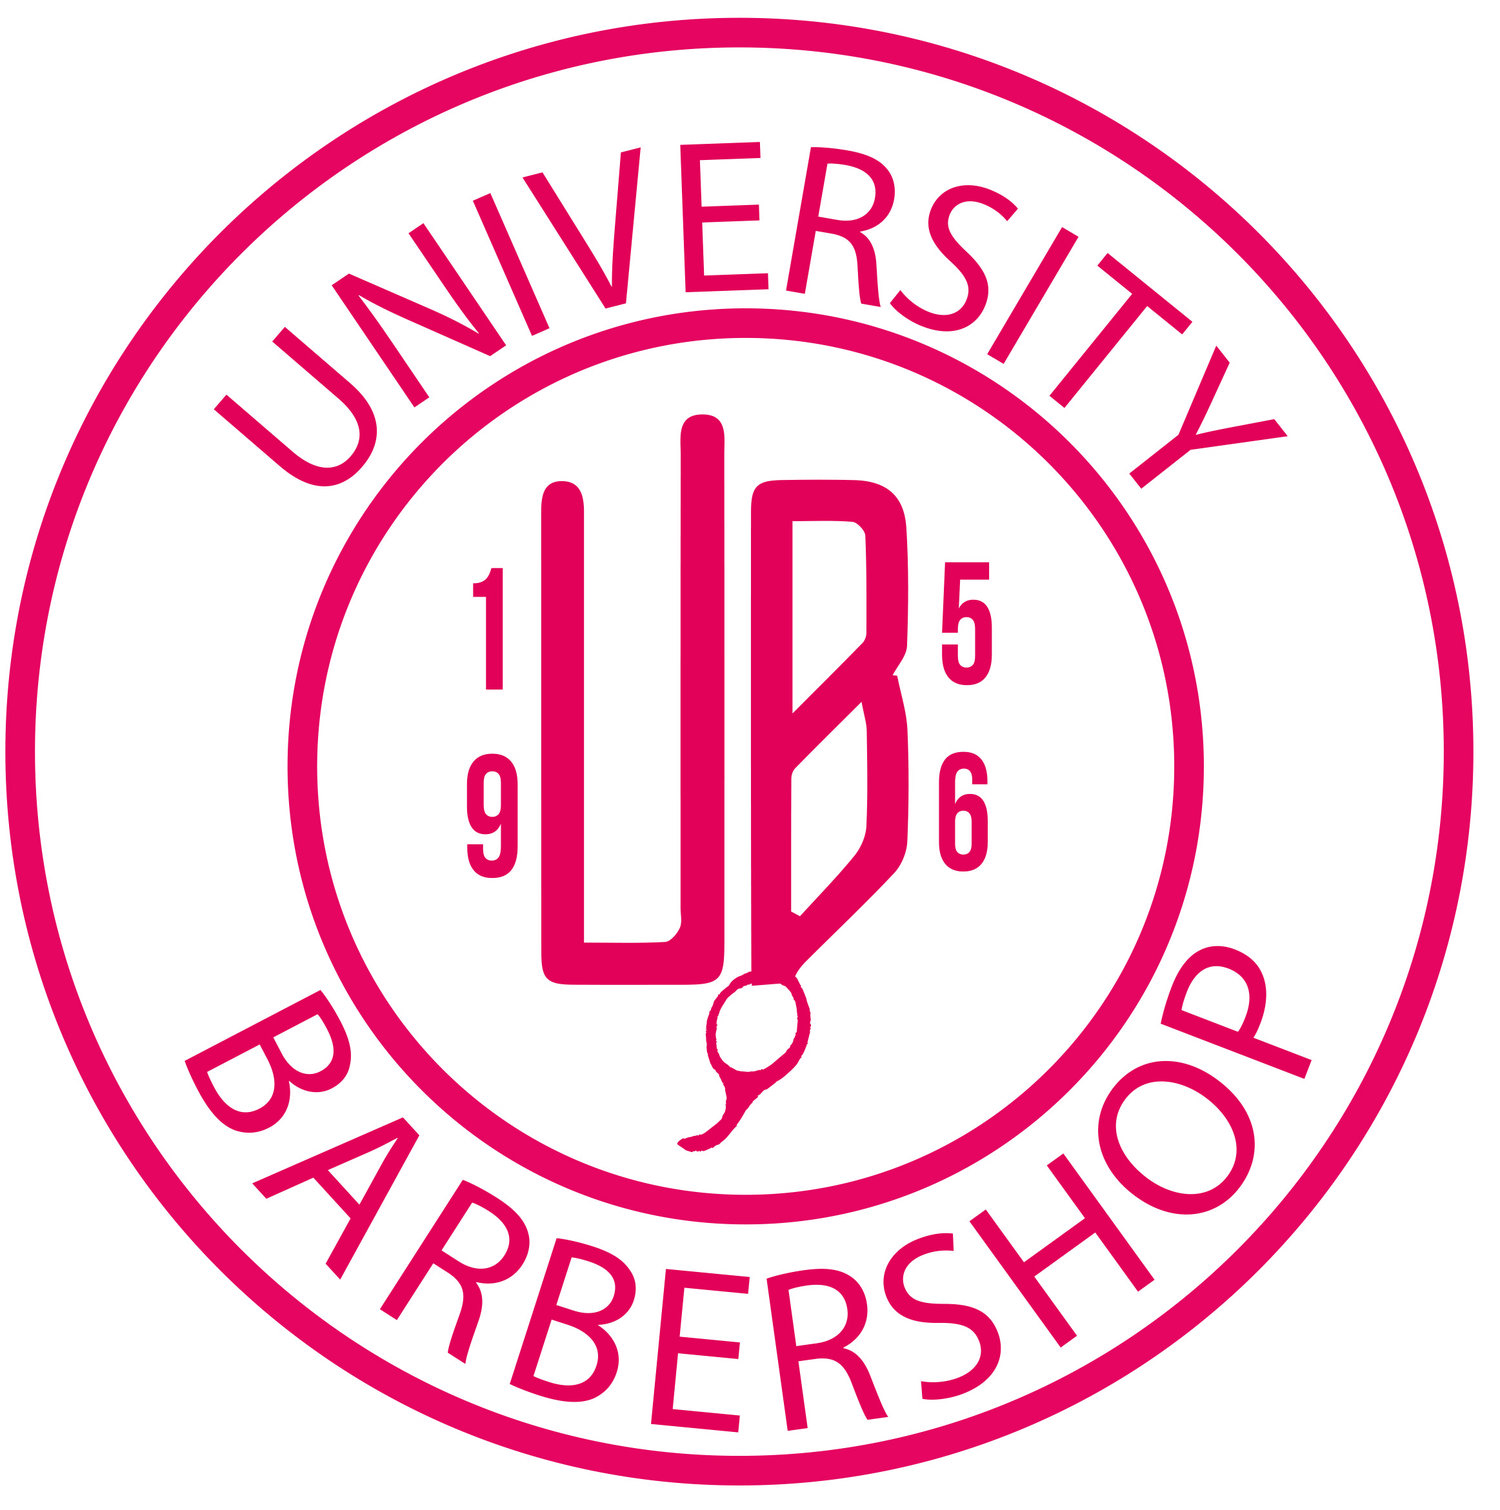 University Barbershop